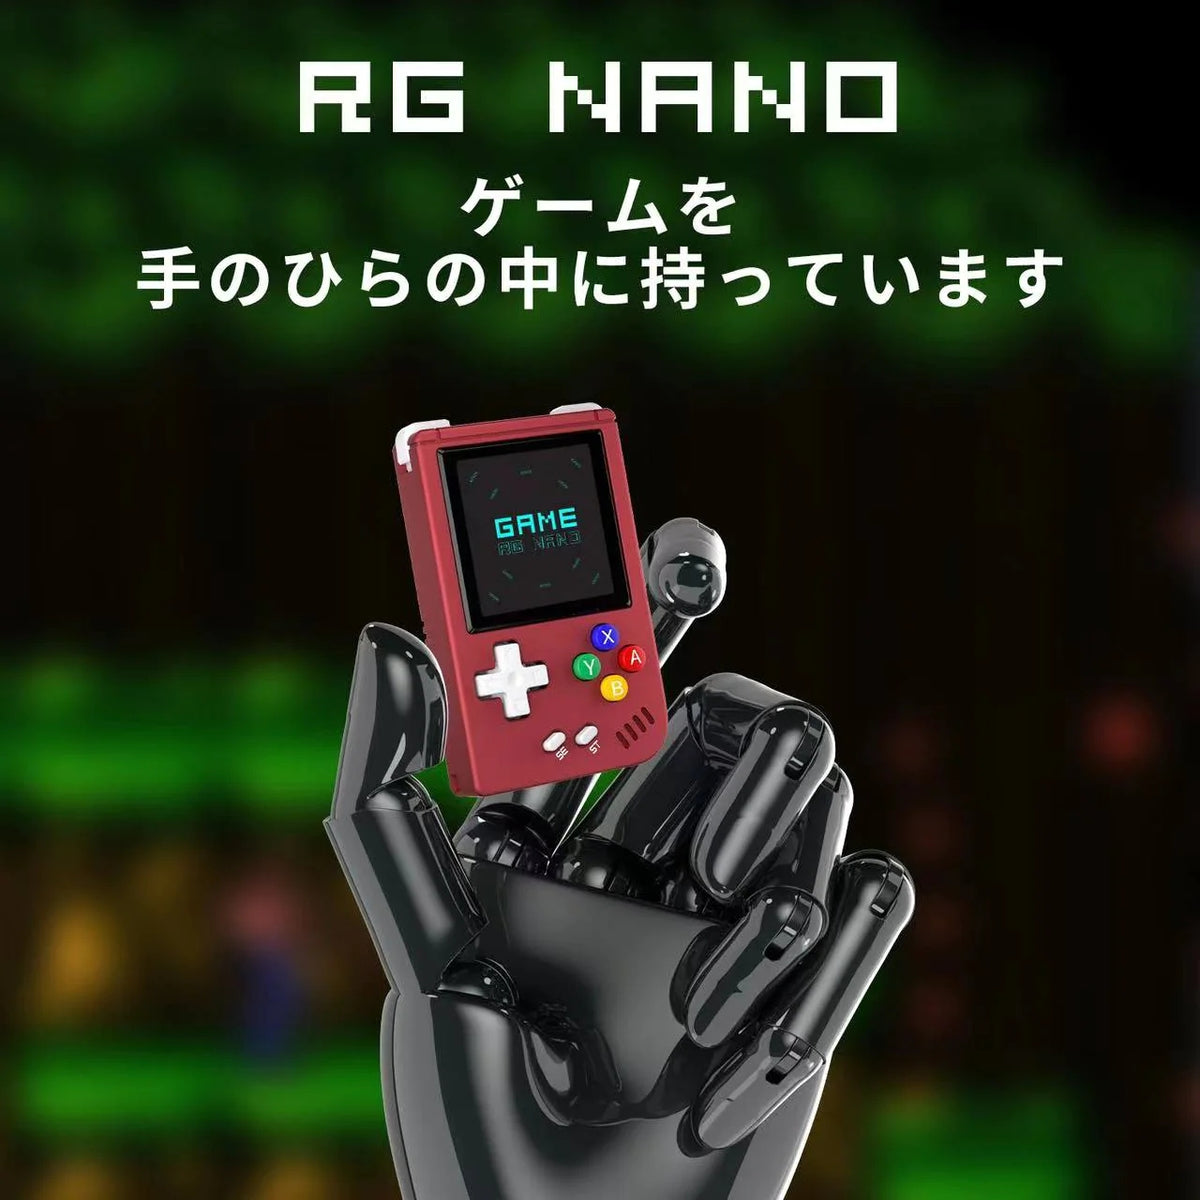 ANBERNIC RG Nano ブルー エミュレータ ゲーム 本体 - テレビゲーム